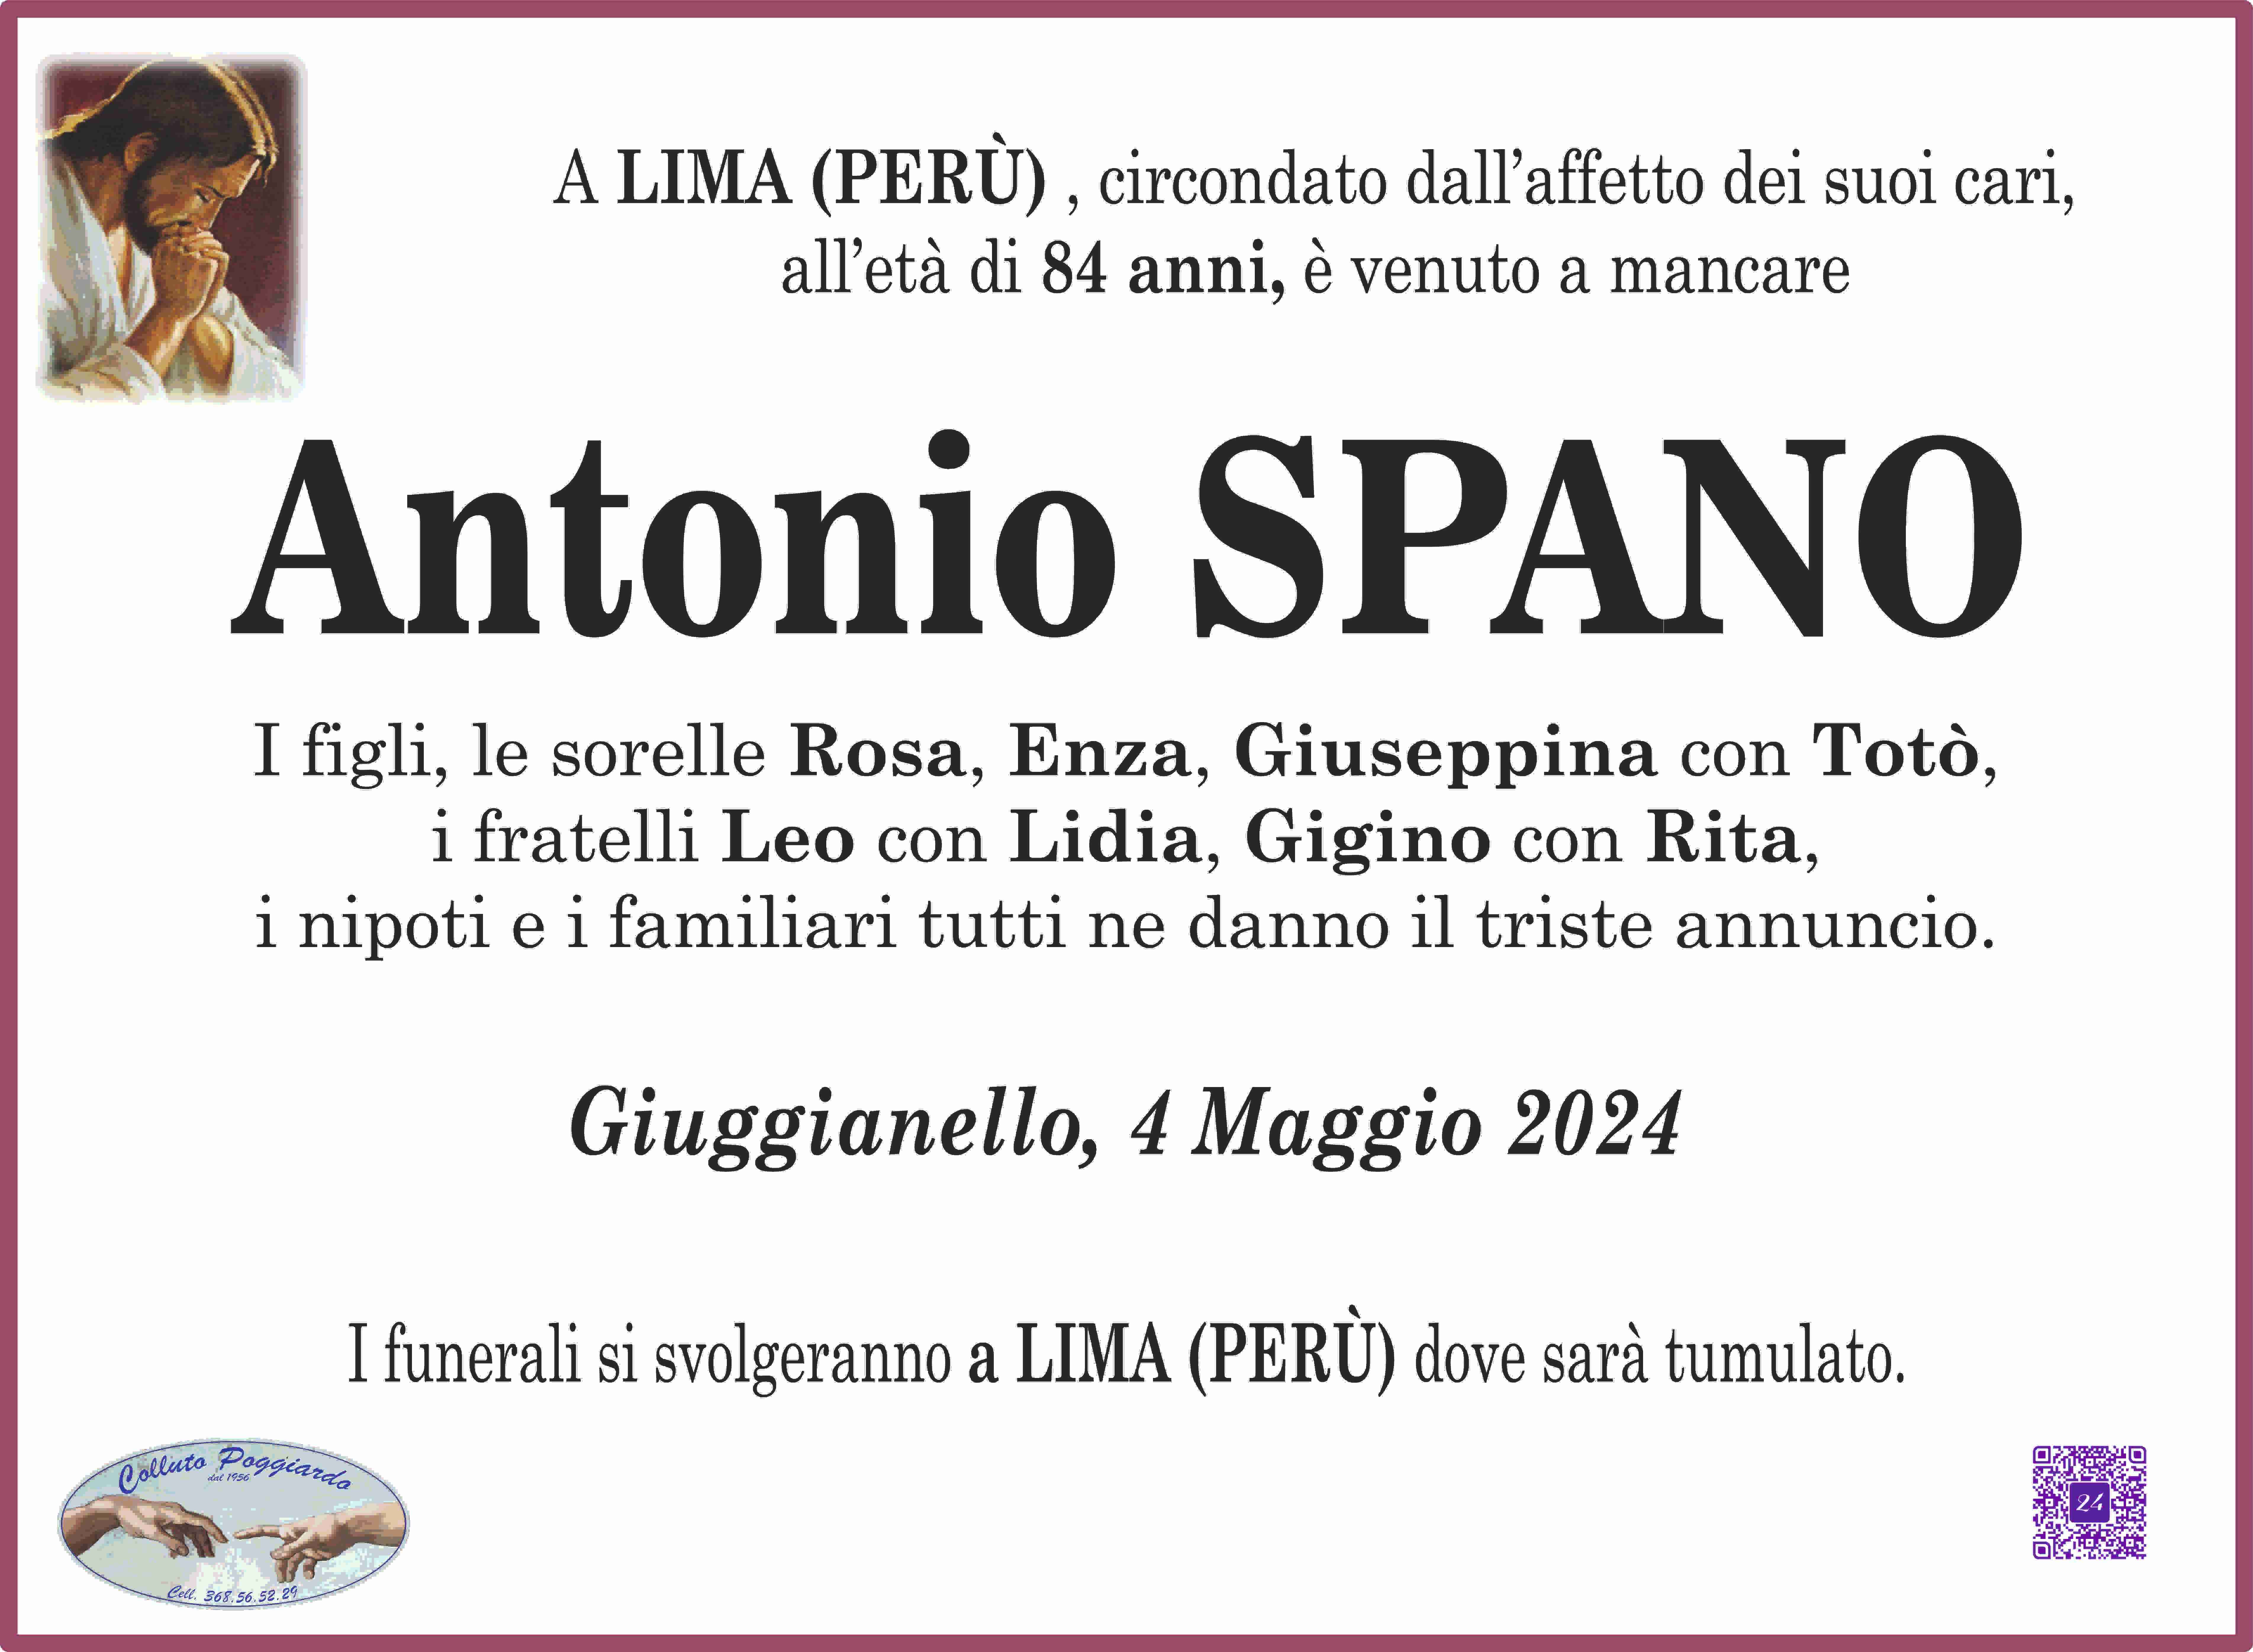 Antonio Spano